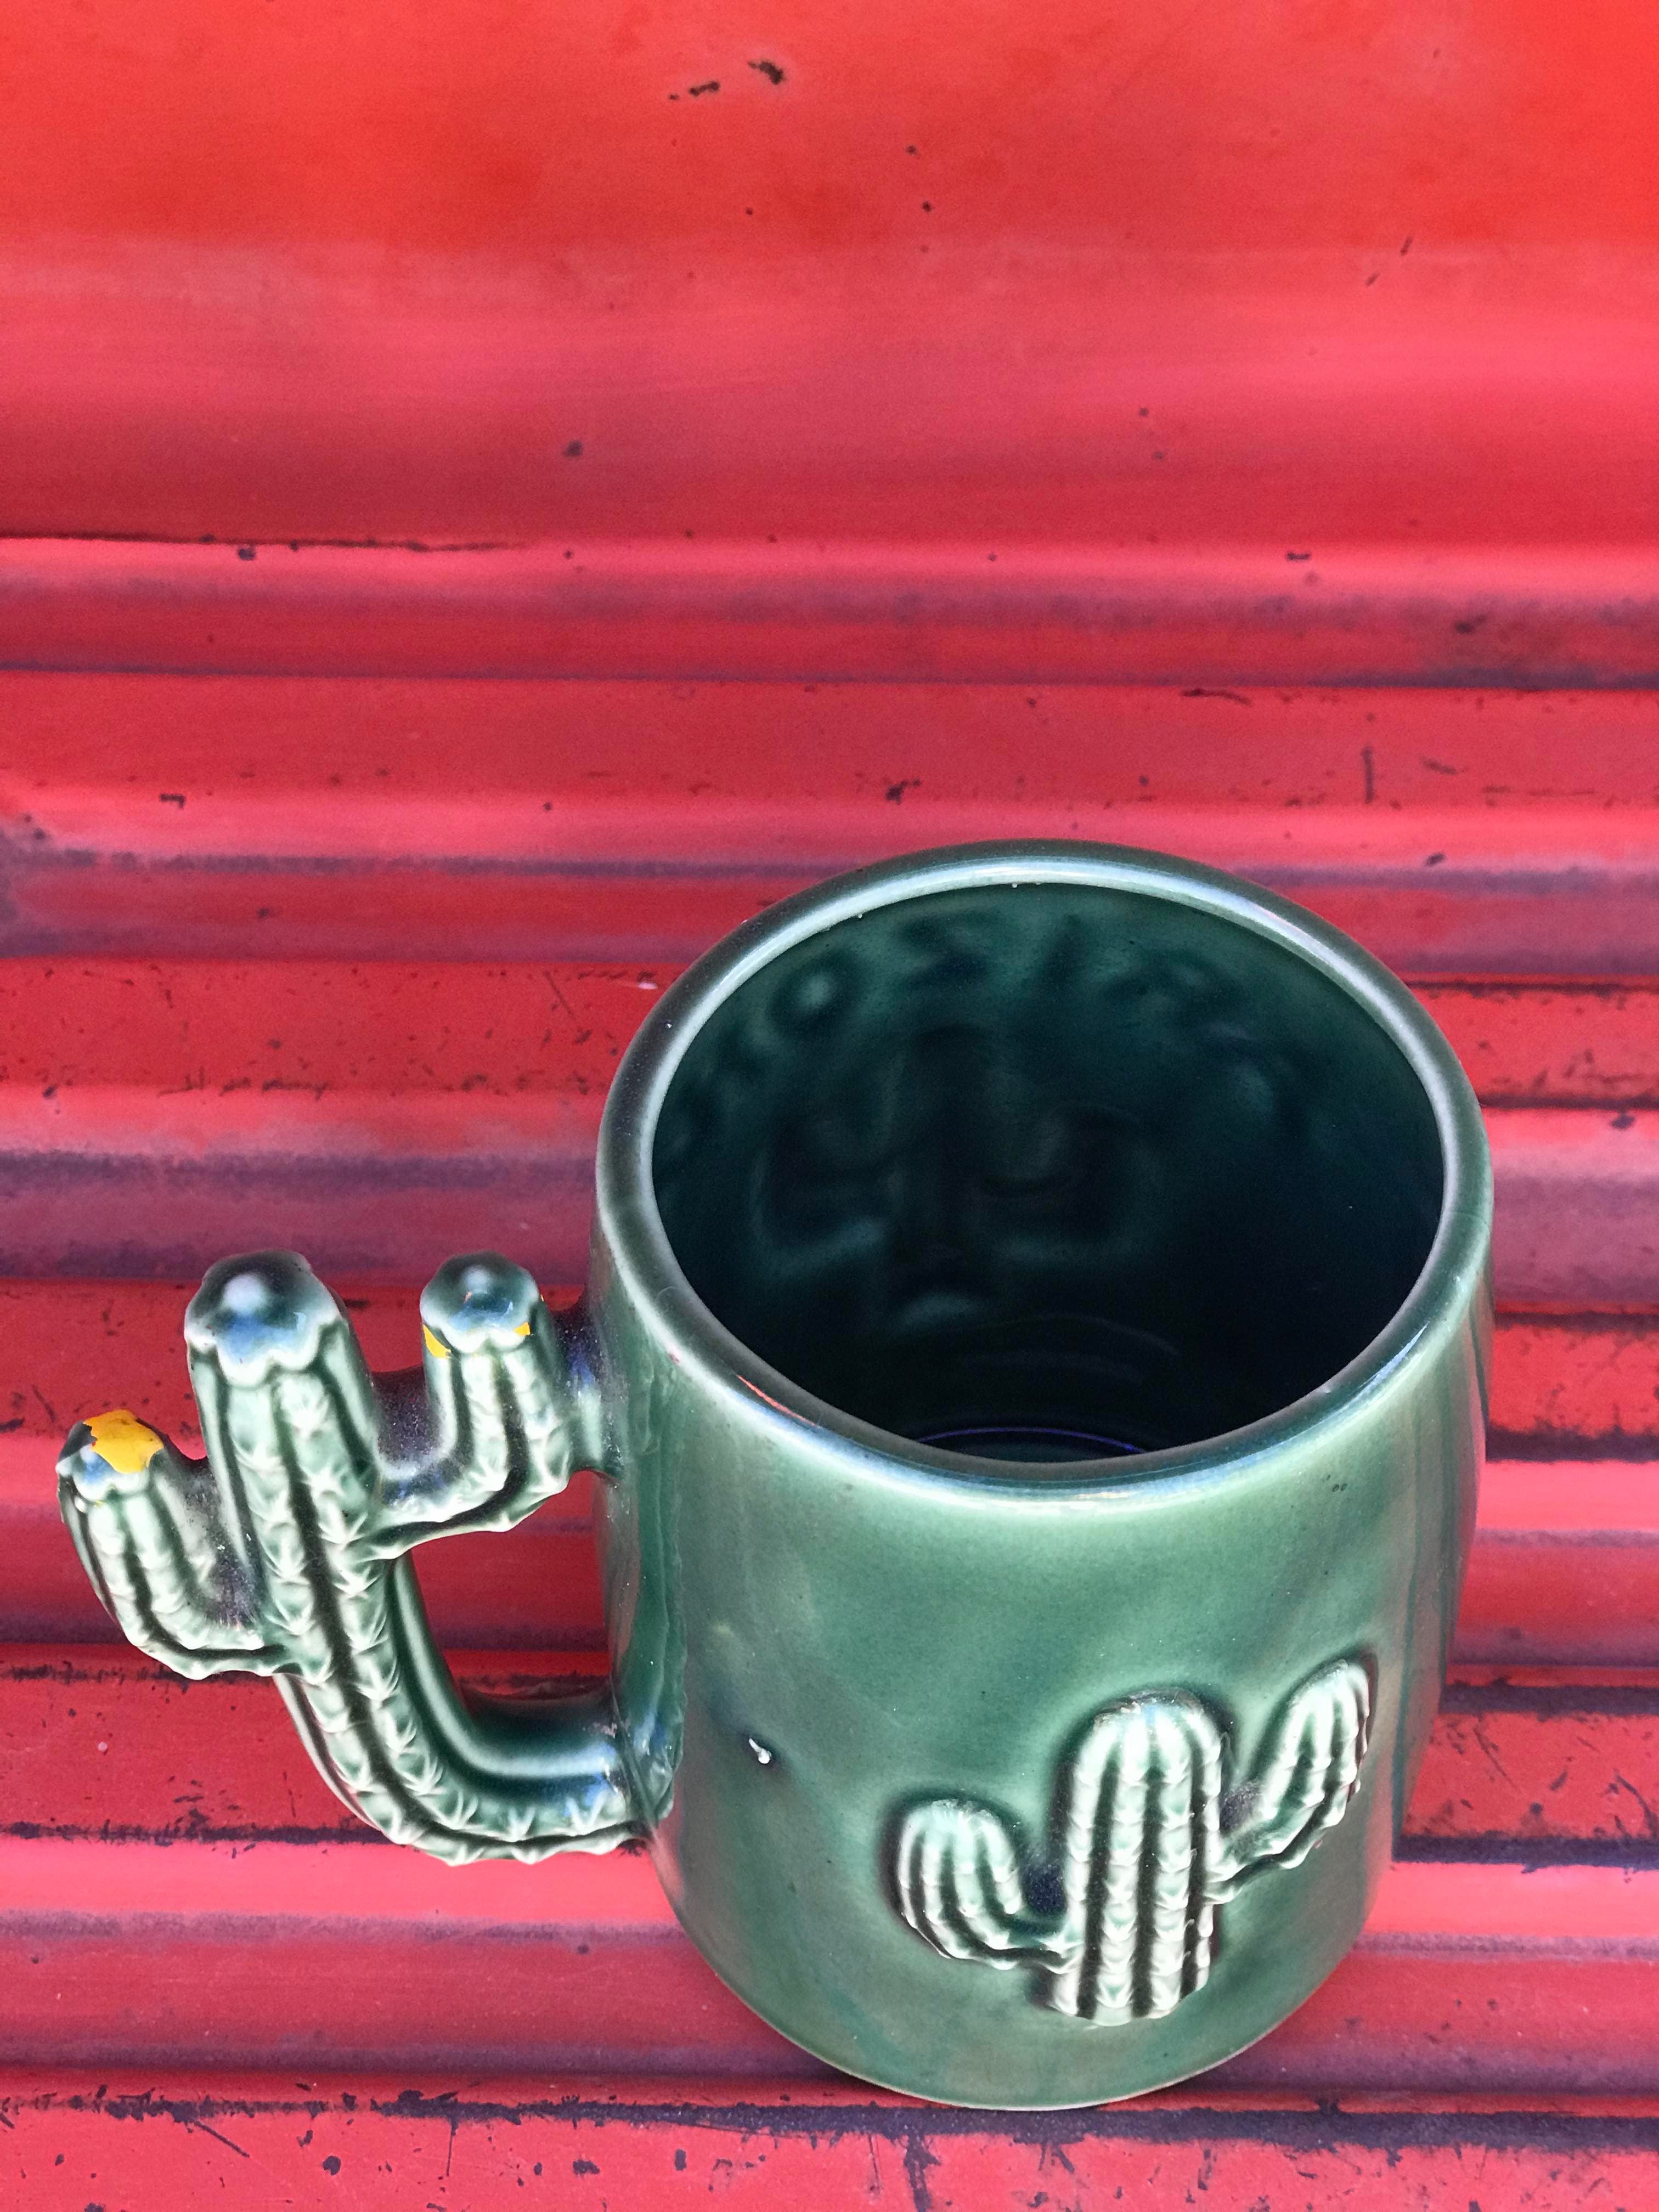 Vintage Saguaro Cactus Mug from Arizona